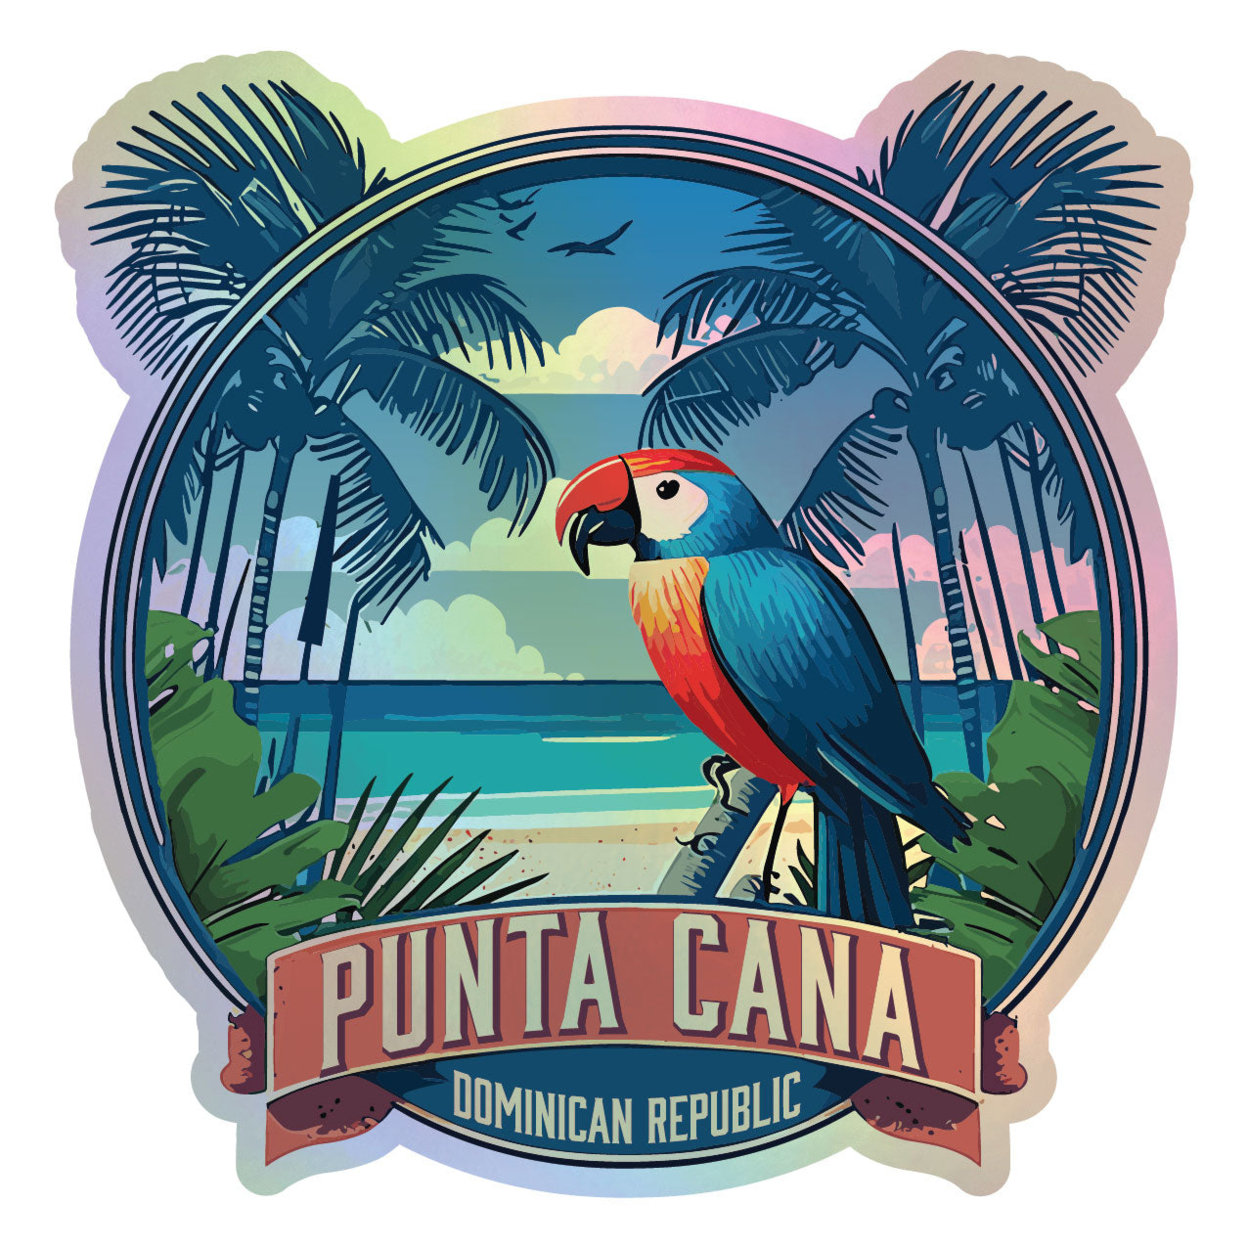 Punta Cana Dominican Republic Holographic Souvenir Vinyl Decal Sticker Parrot Design - 10 Inch